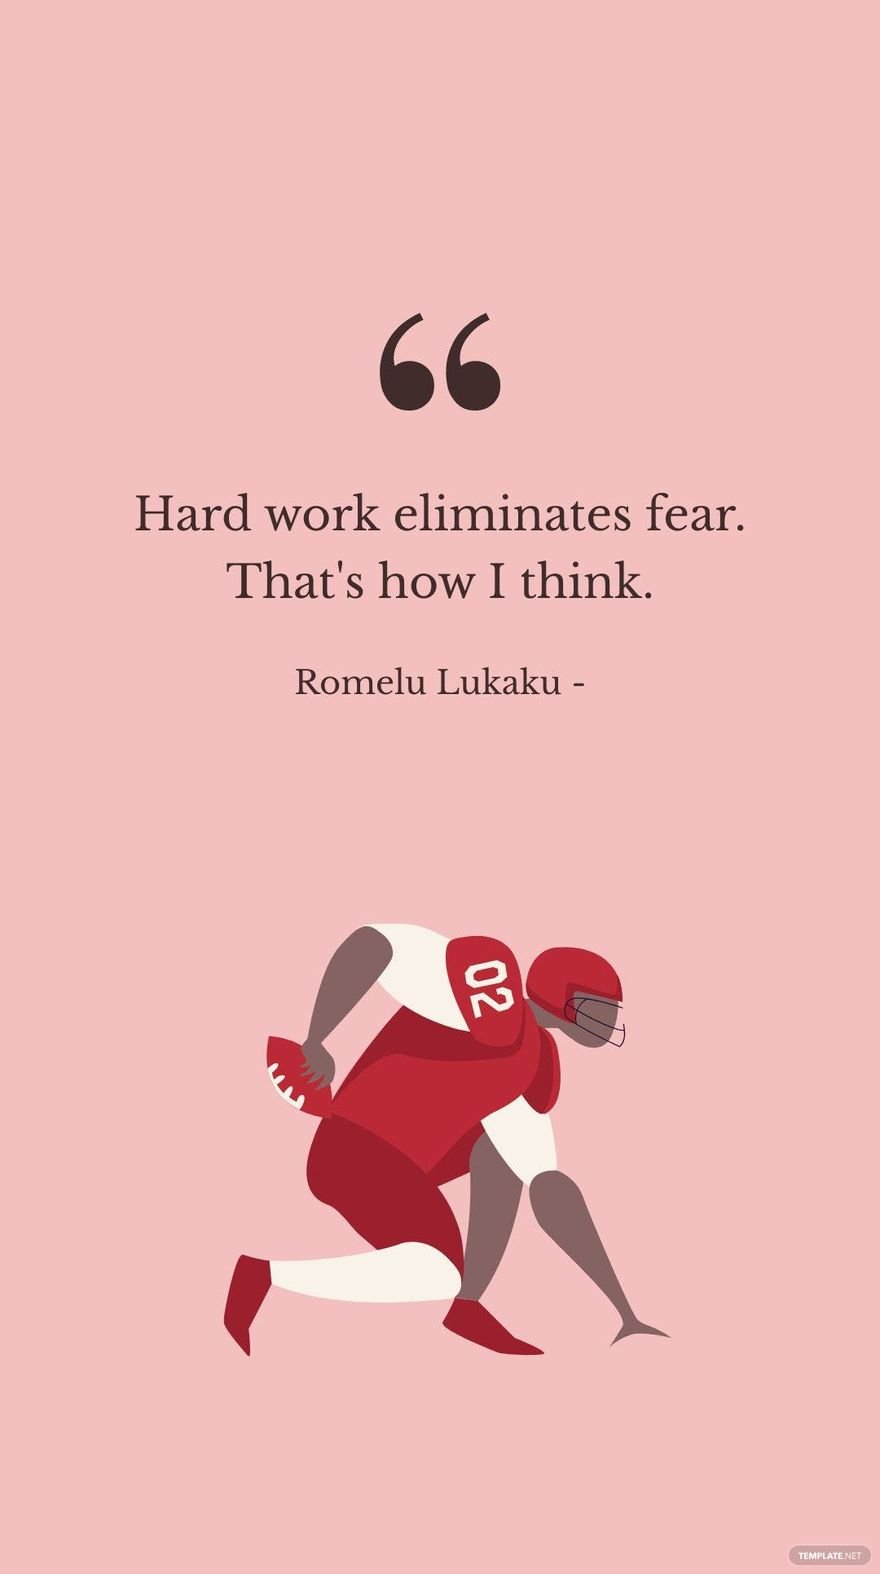 Romelu Lukaku - Hard work eliminates fear. That's how I think. in JPG